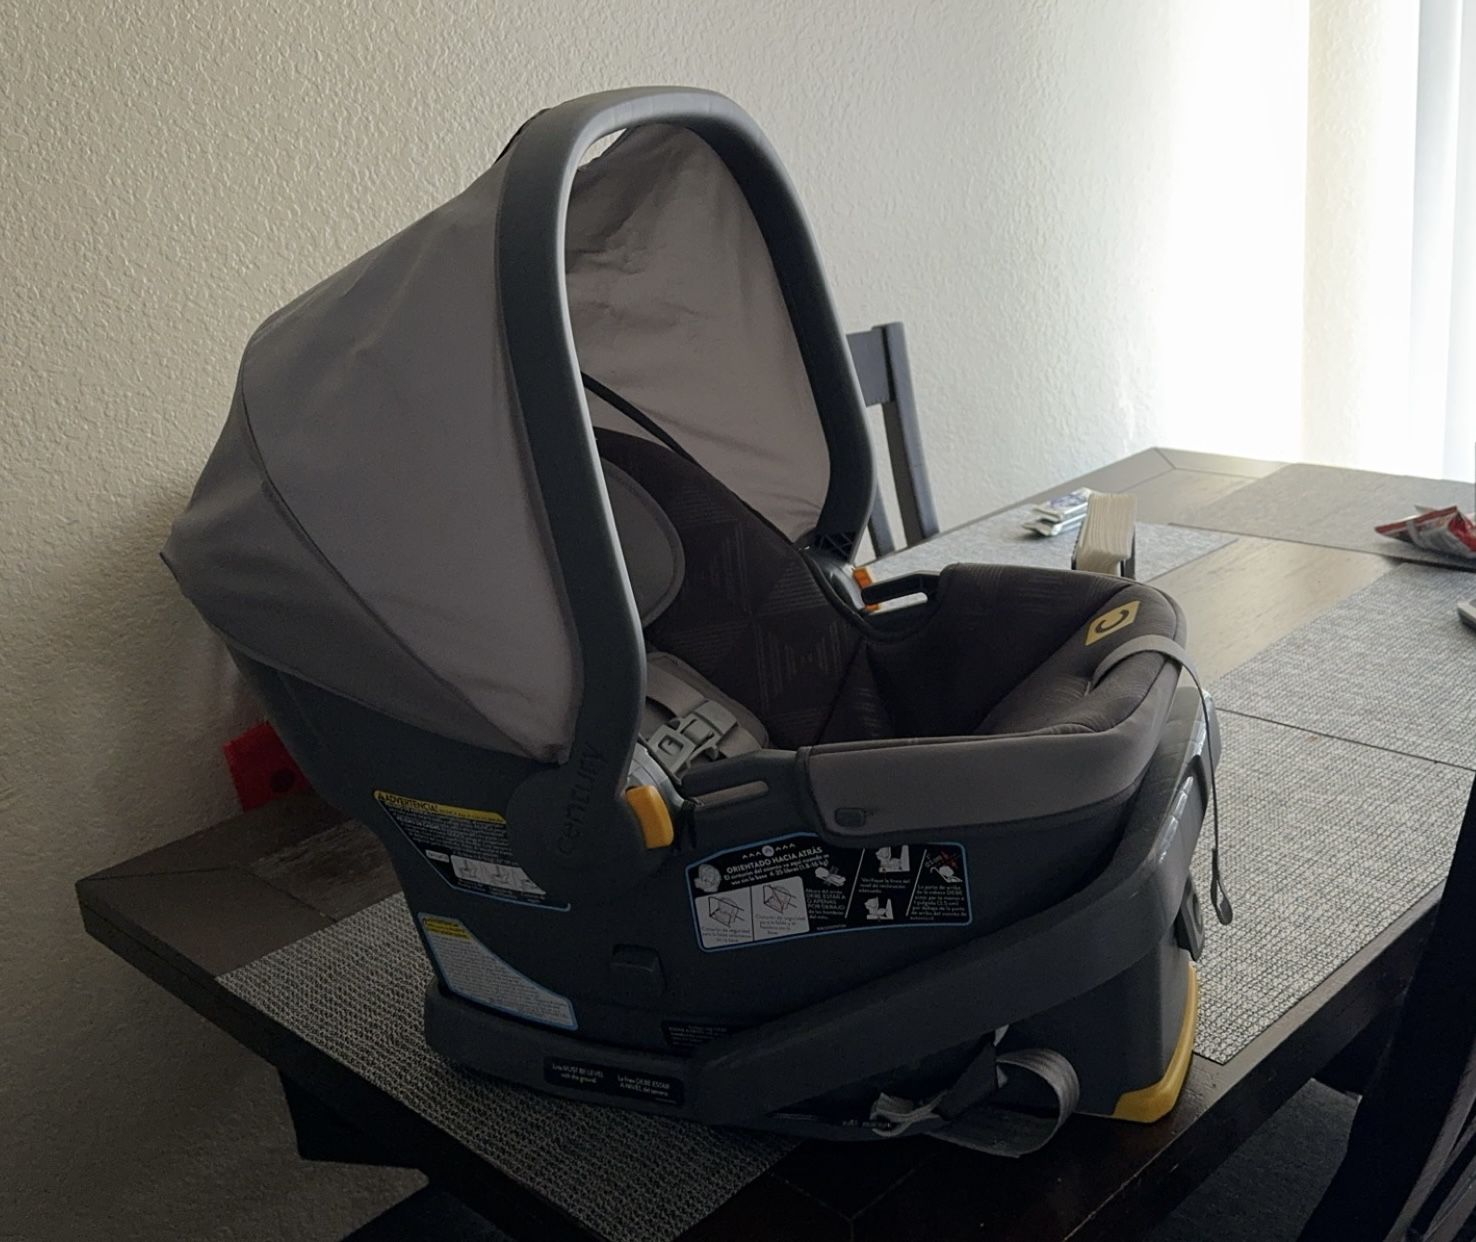 Infant car Seat 